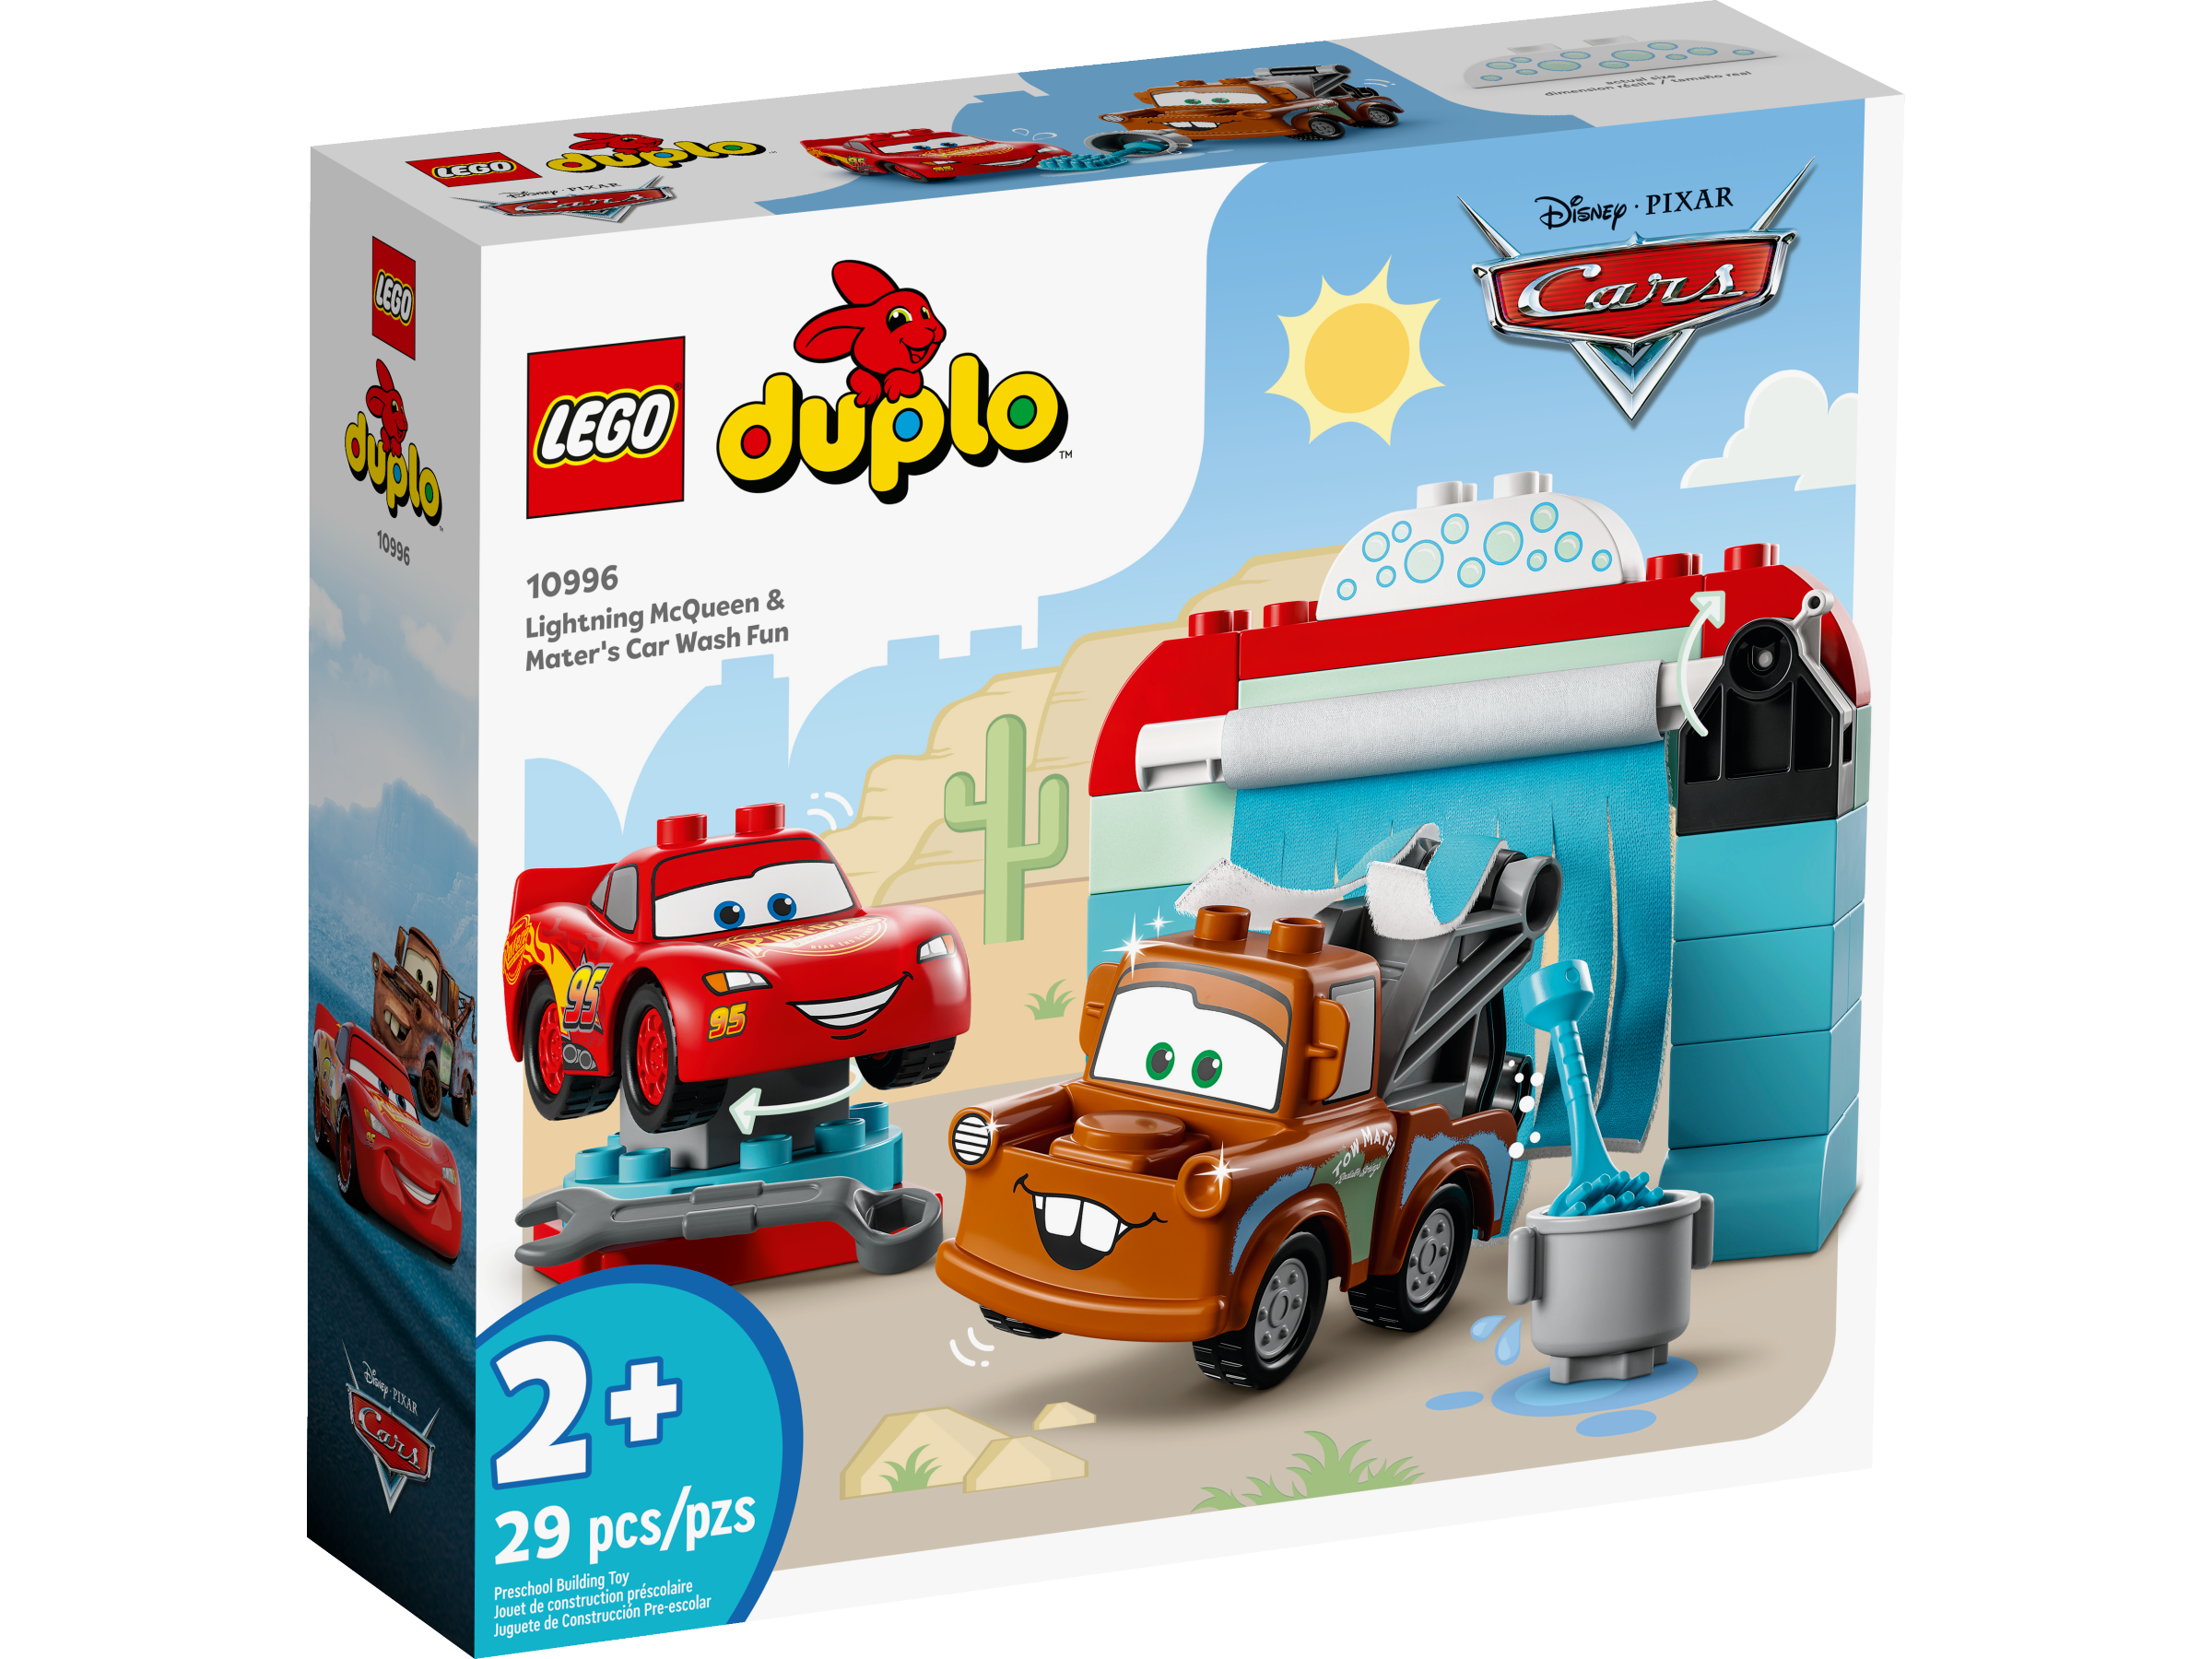 DUPLO® | Building Sets & Bricks | Official LEGO® Shop US